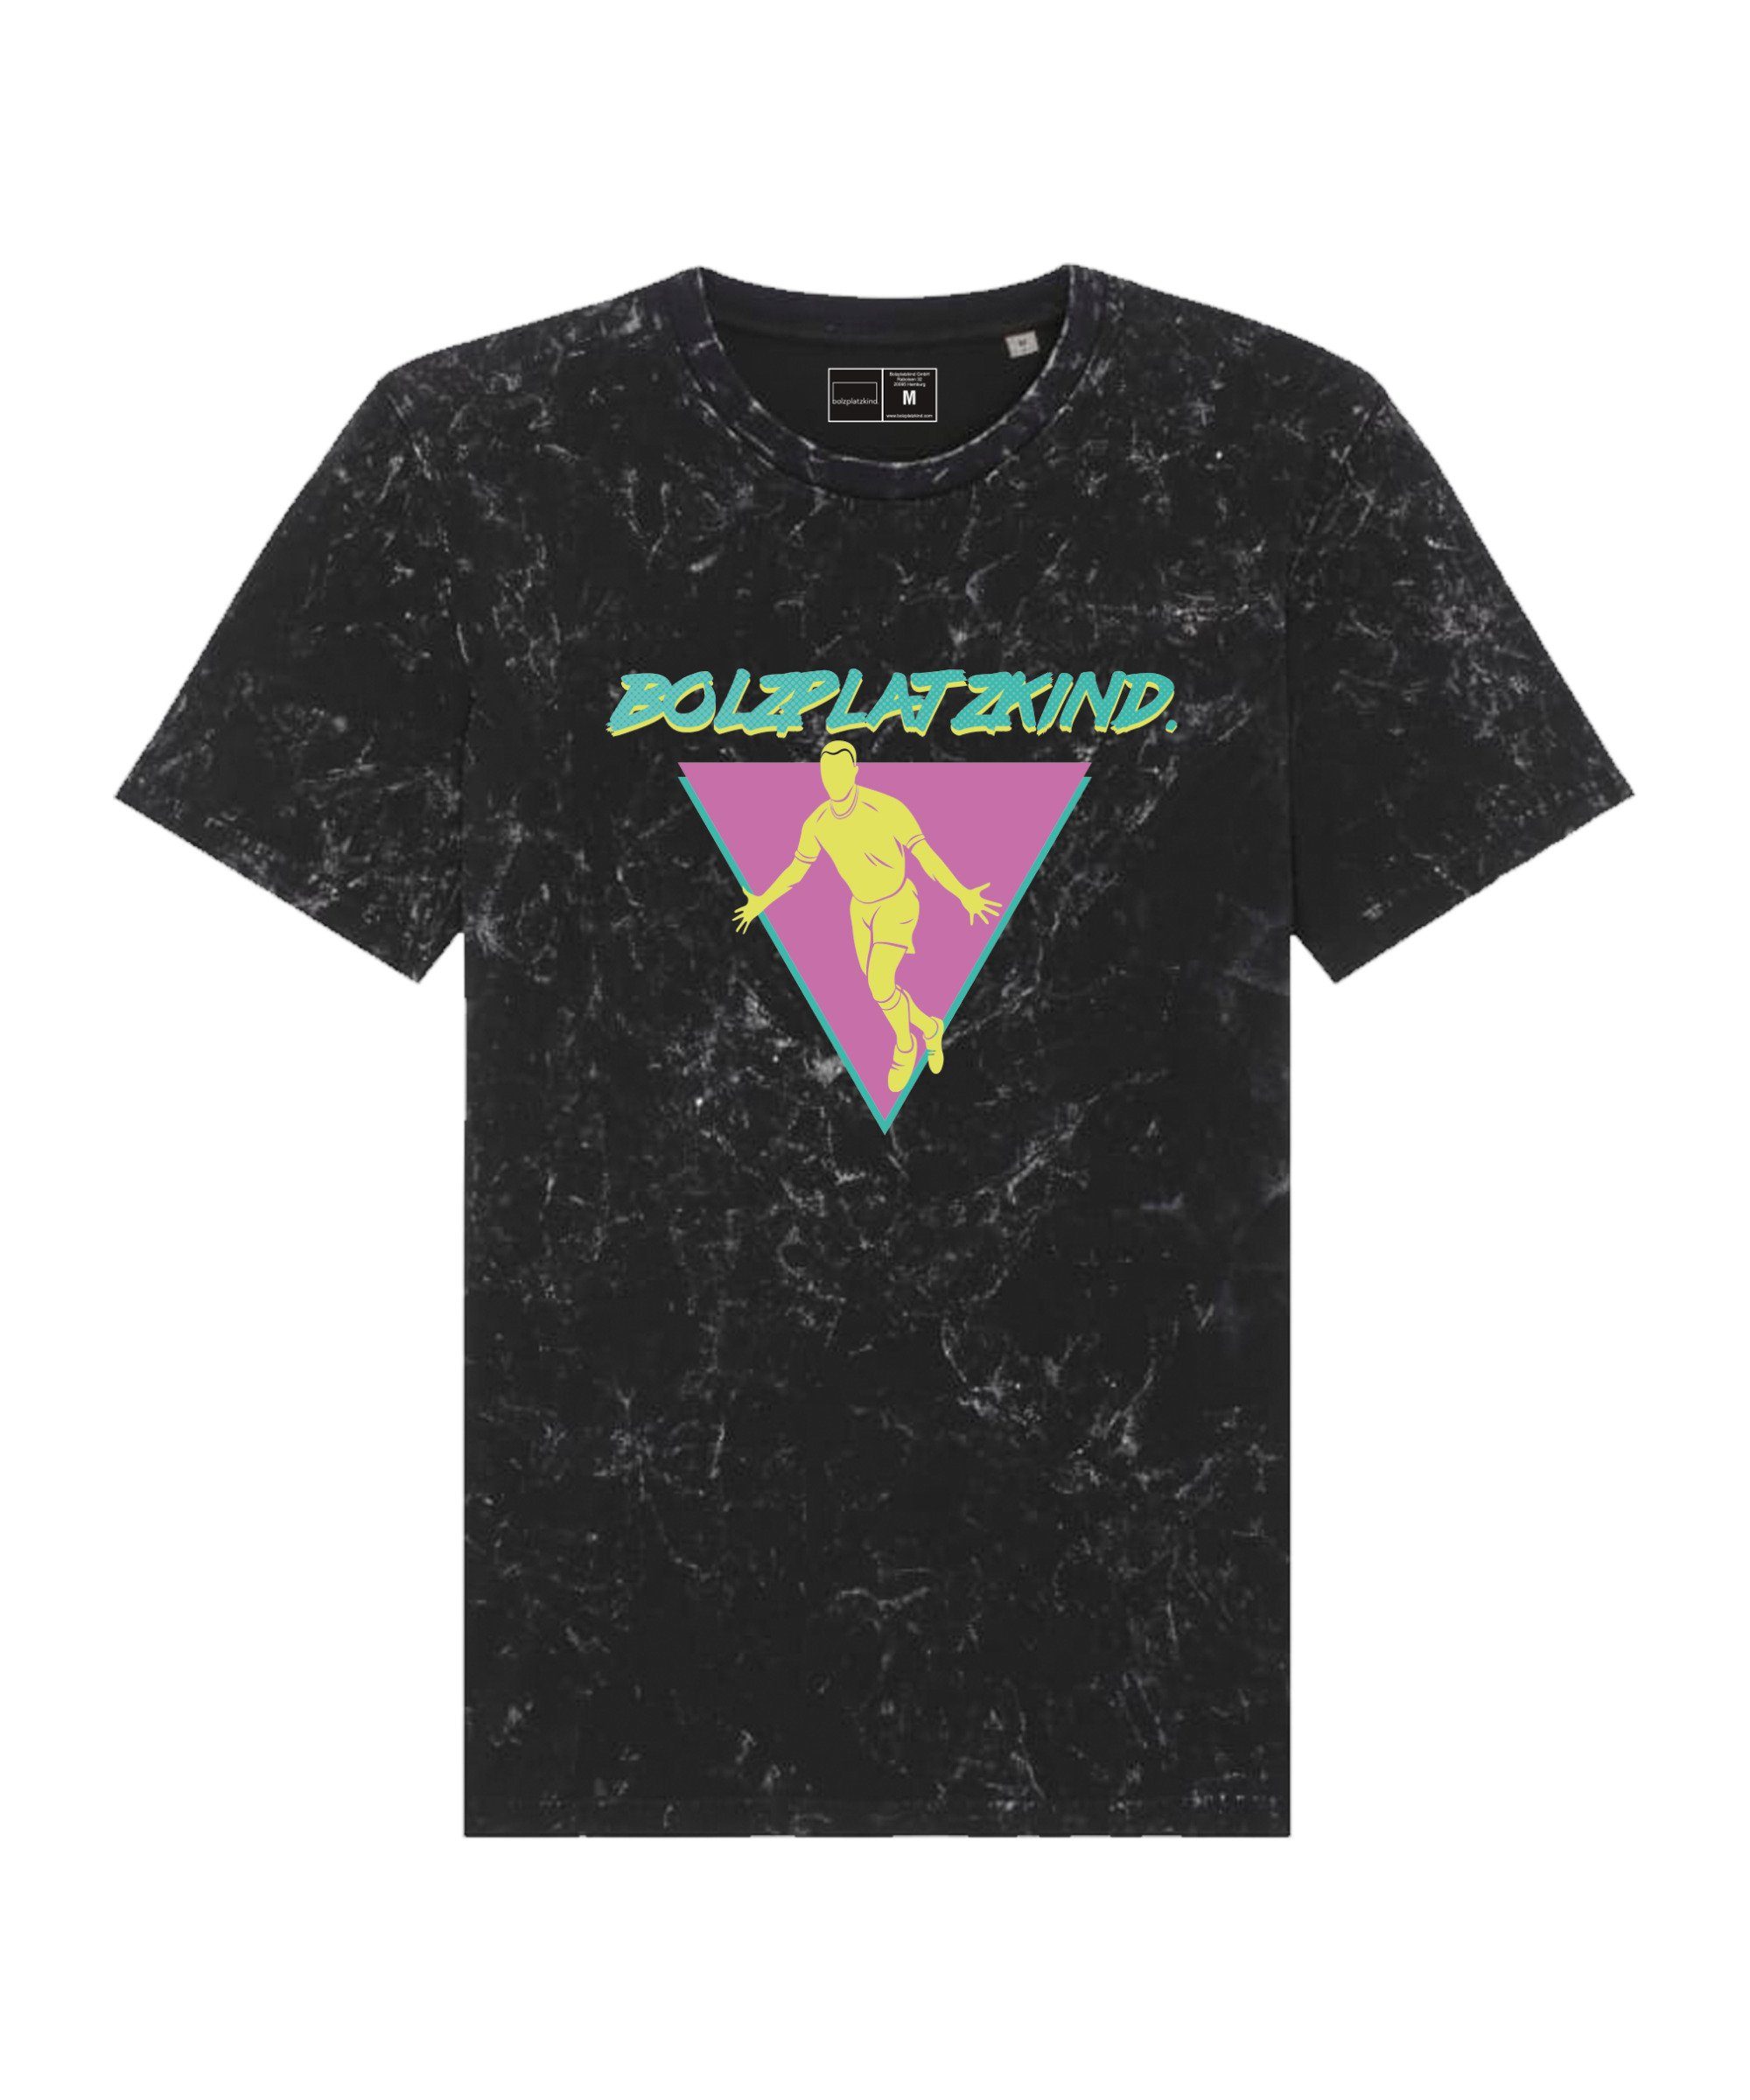 Bolzplatzkind T-Shirt "80er Jahre" Straddle T-Shirt default schwarzgruenlilagelb